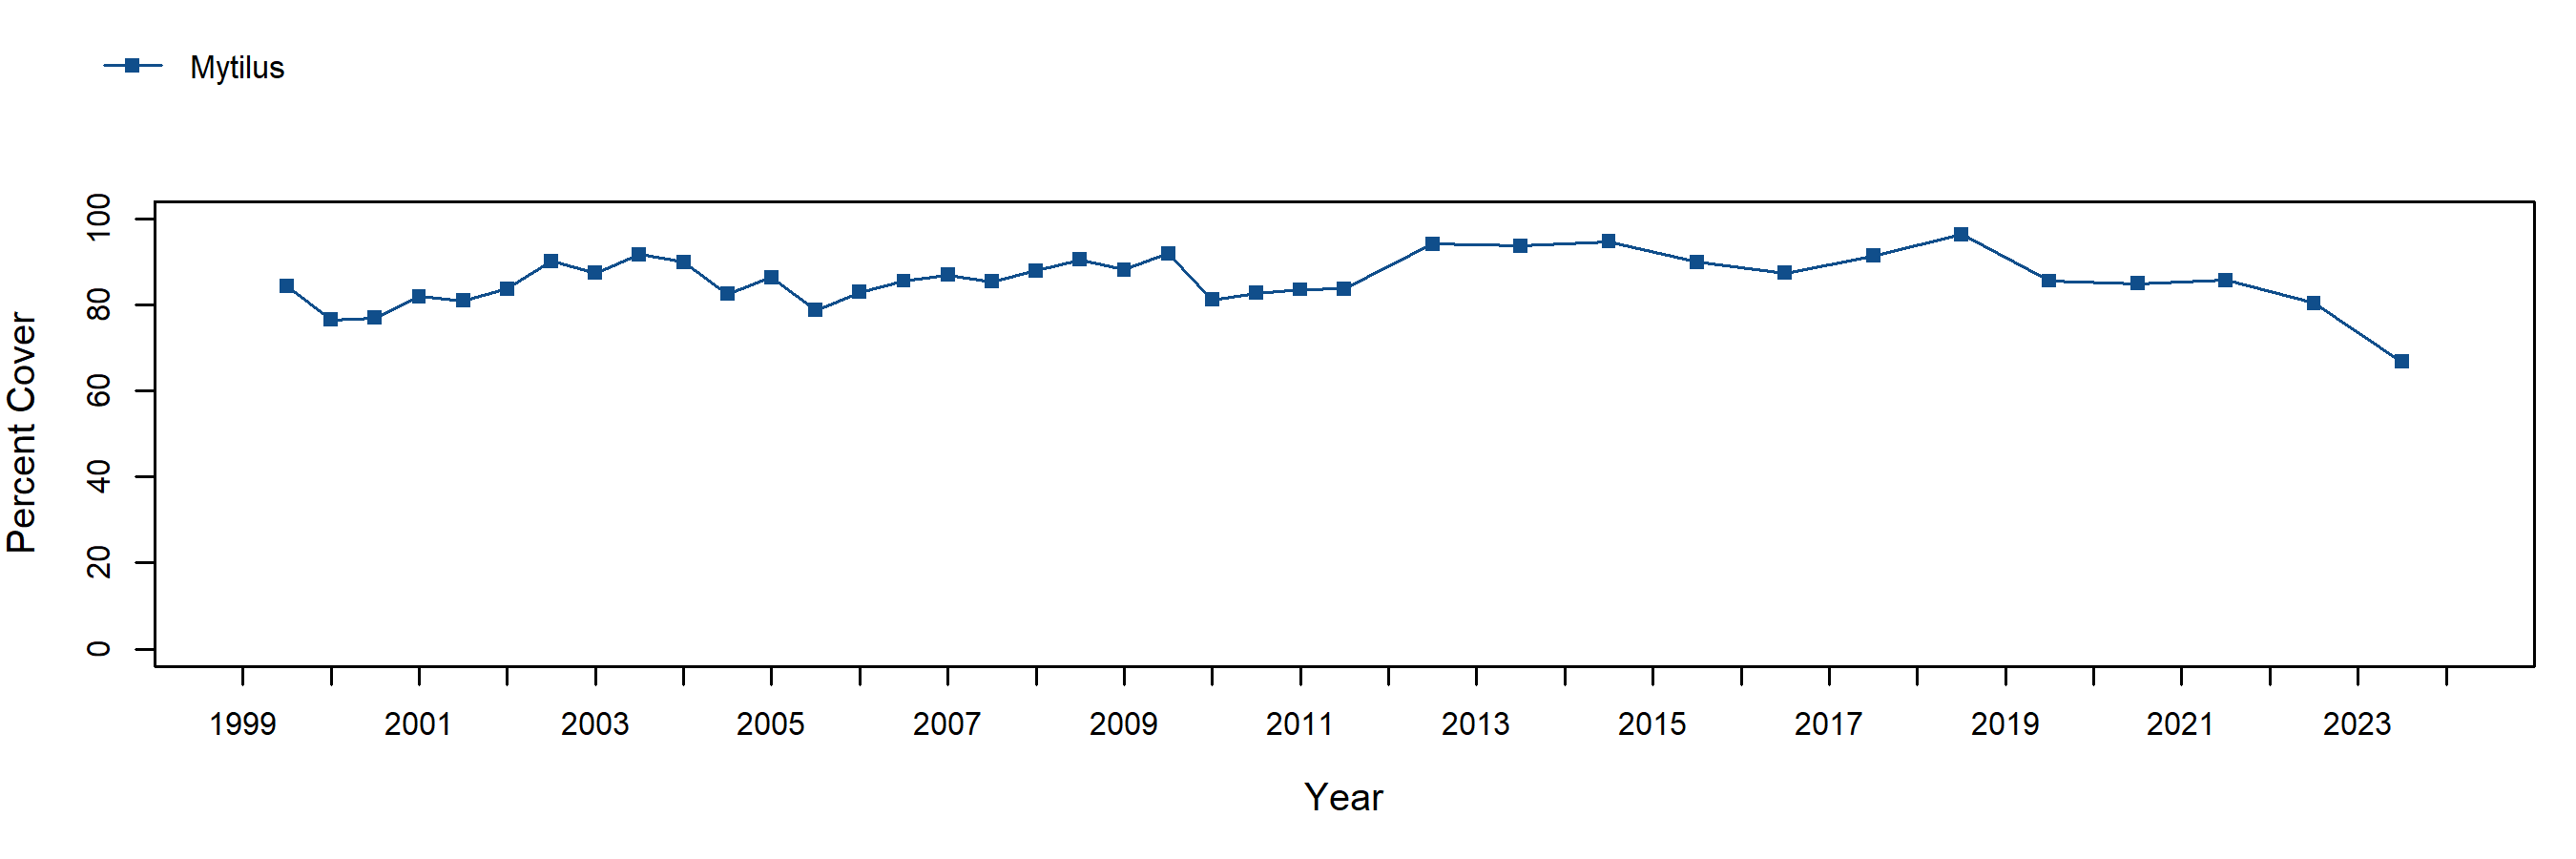 Hopkins Mytilus trend plot